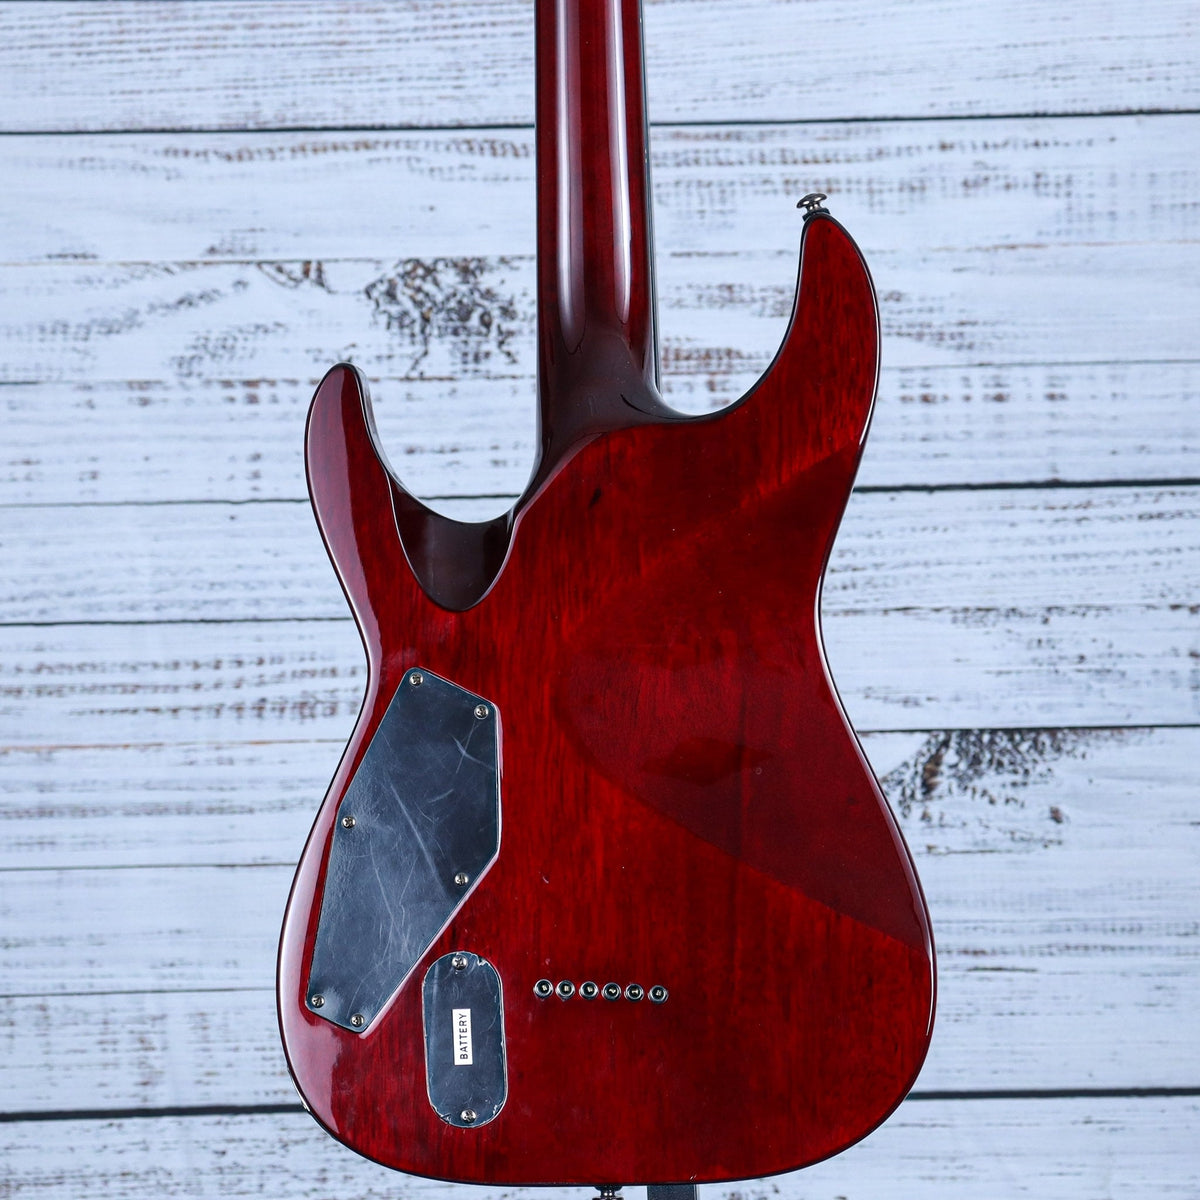 *USED* LTD H351NT Electric Guitar | See Through Black Cherry